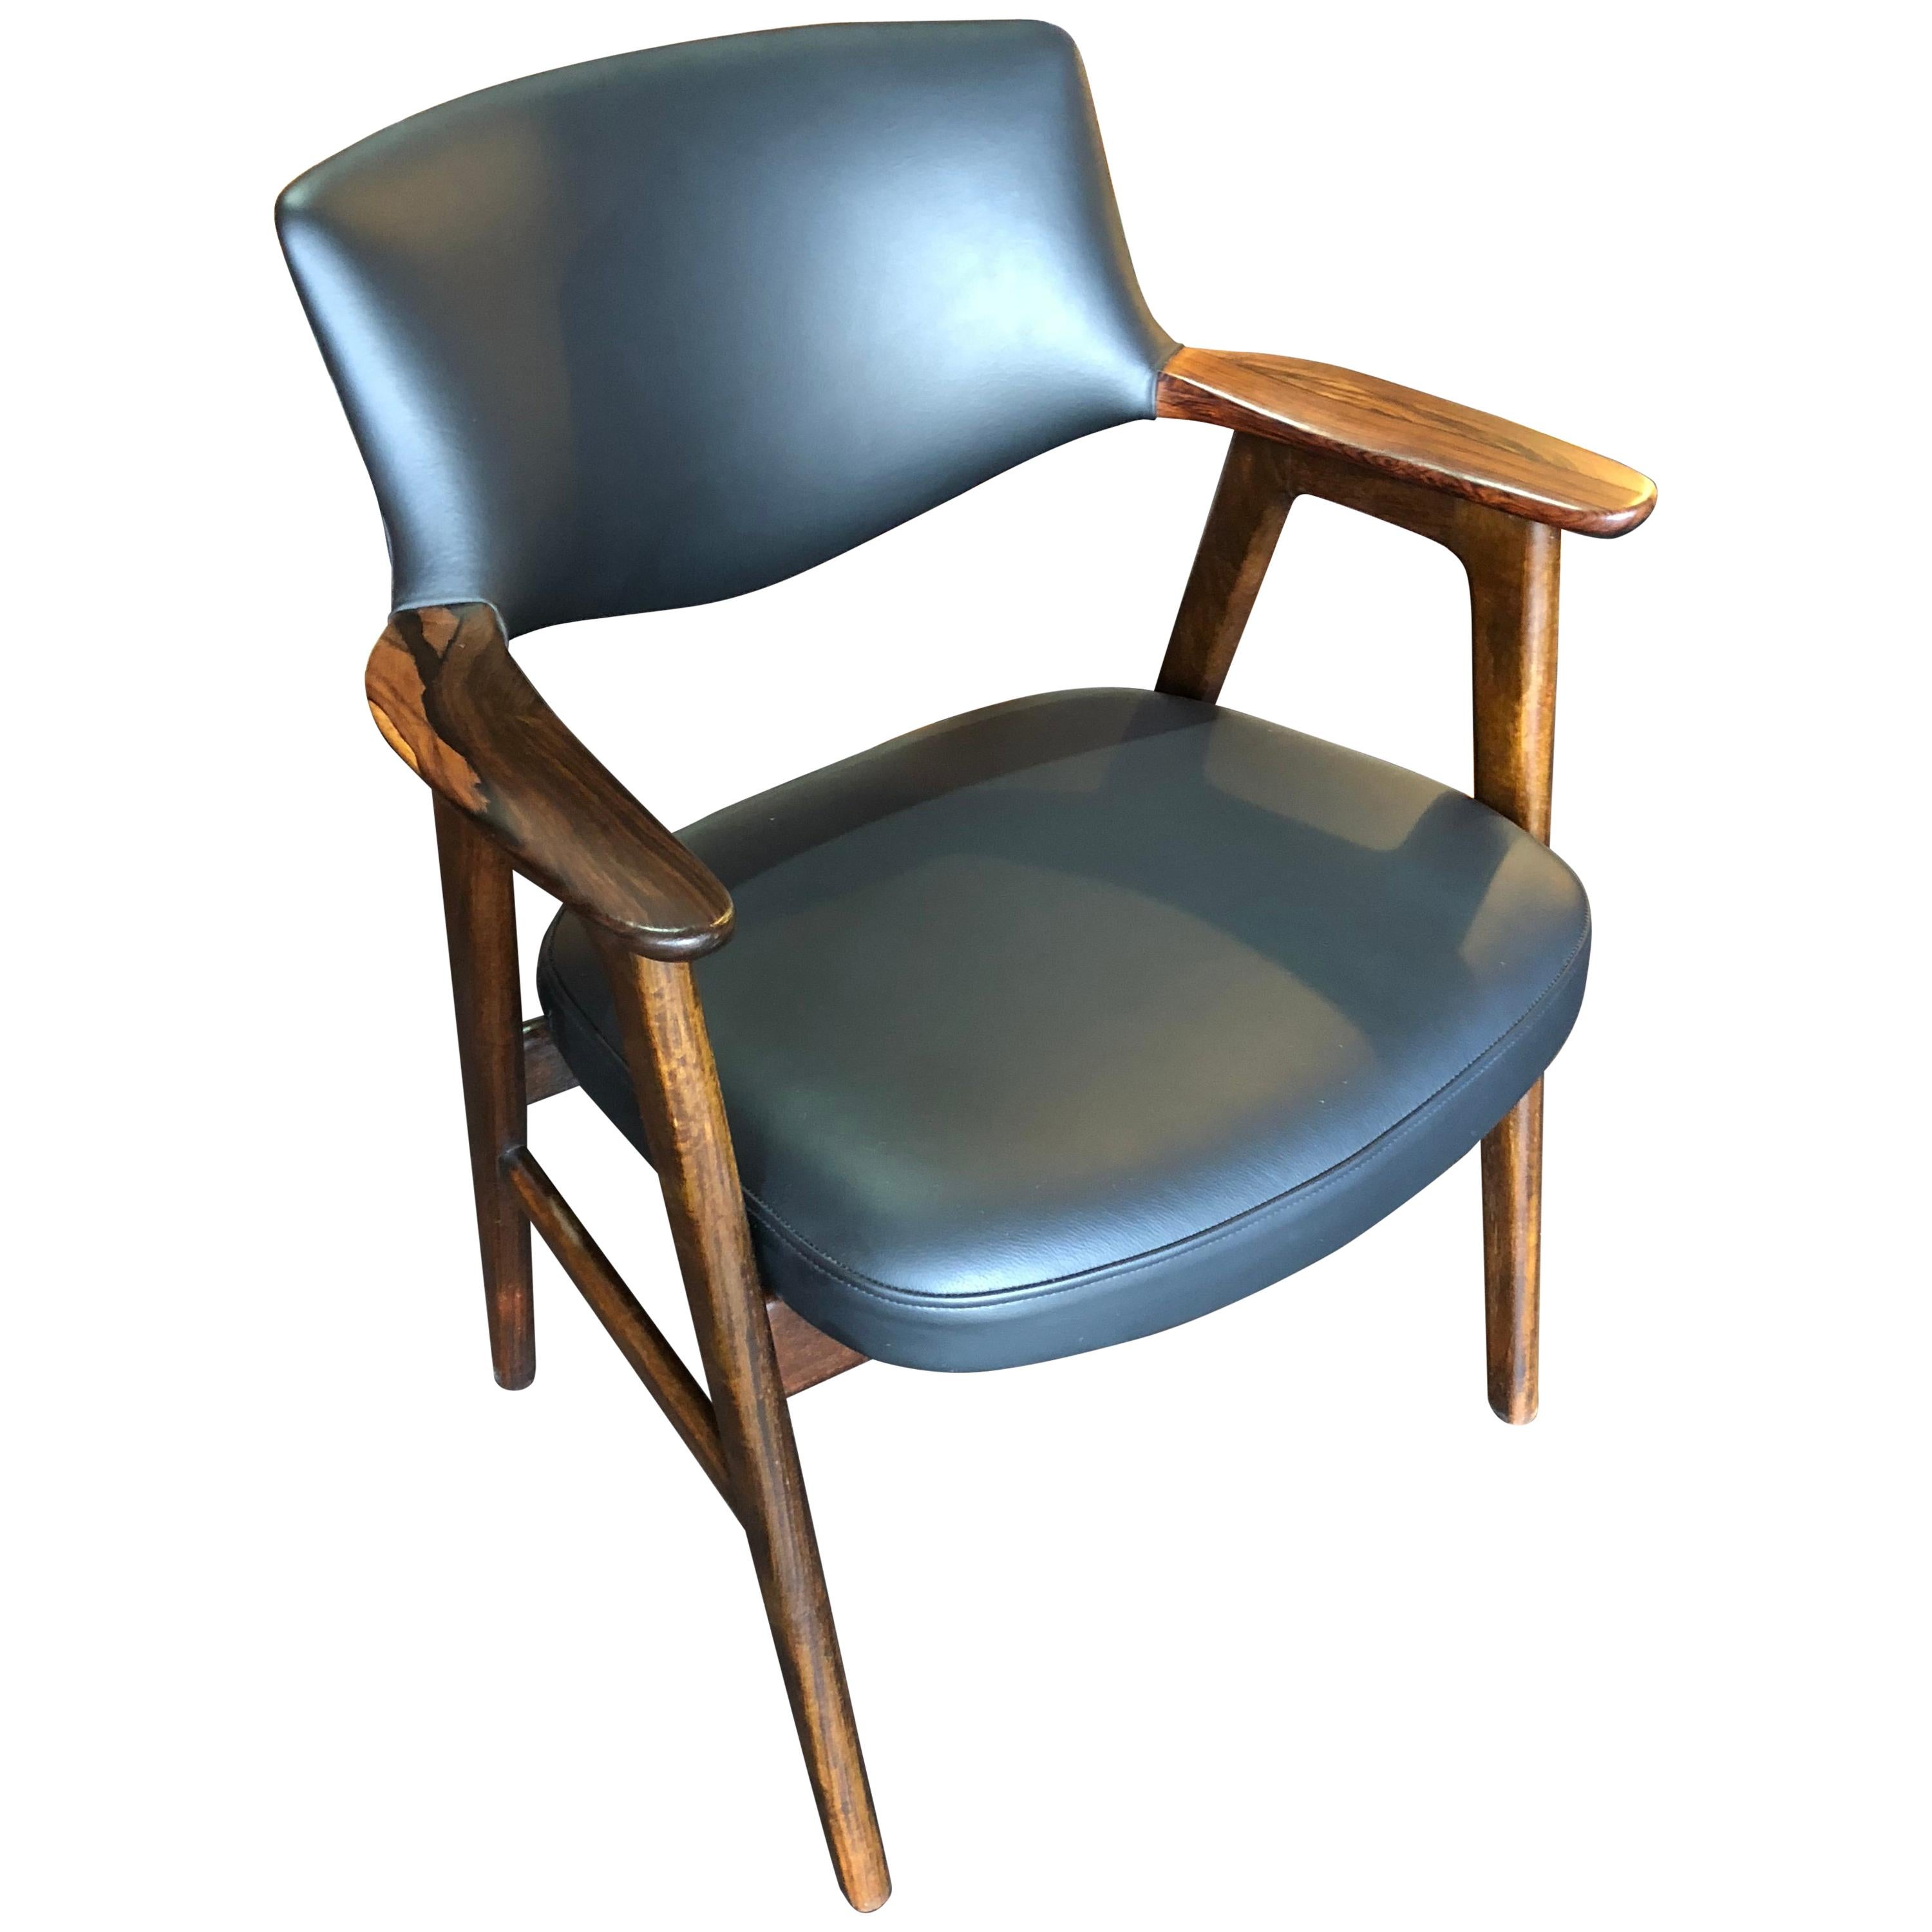 Danish Midcentury Rosewood Chairs, Erik Kirkegaard, 6 available.